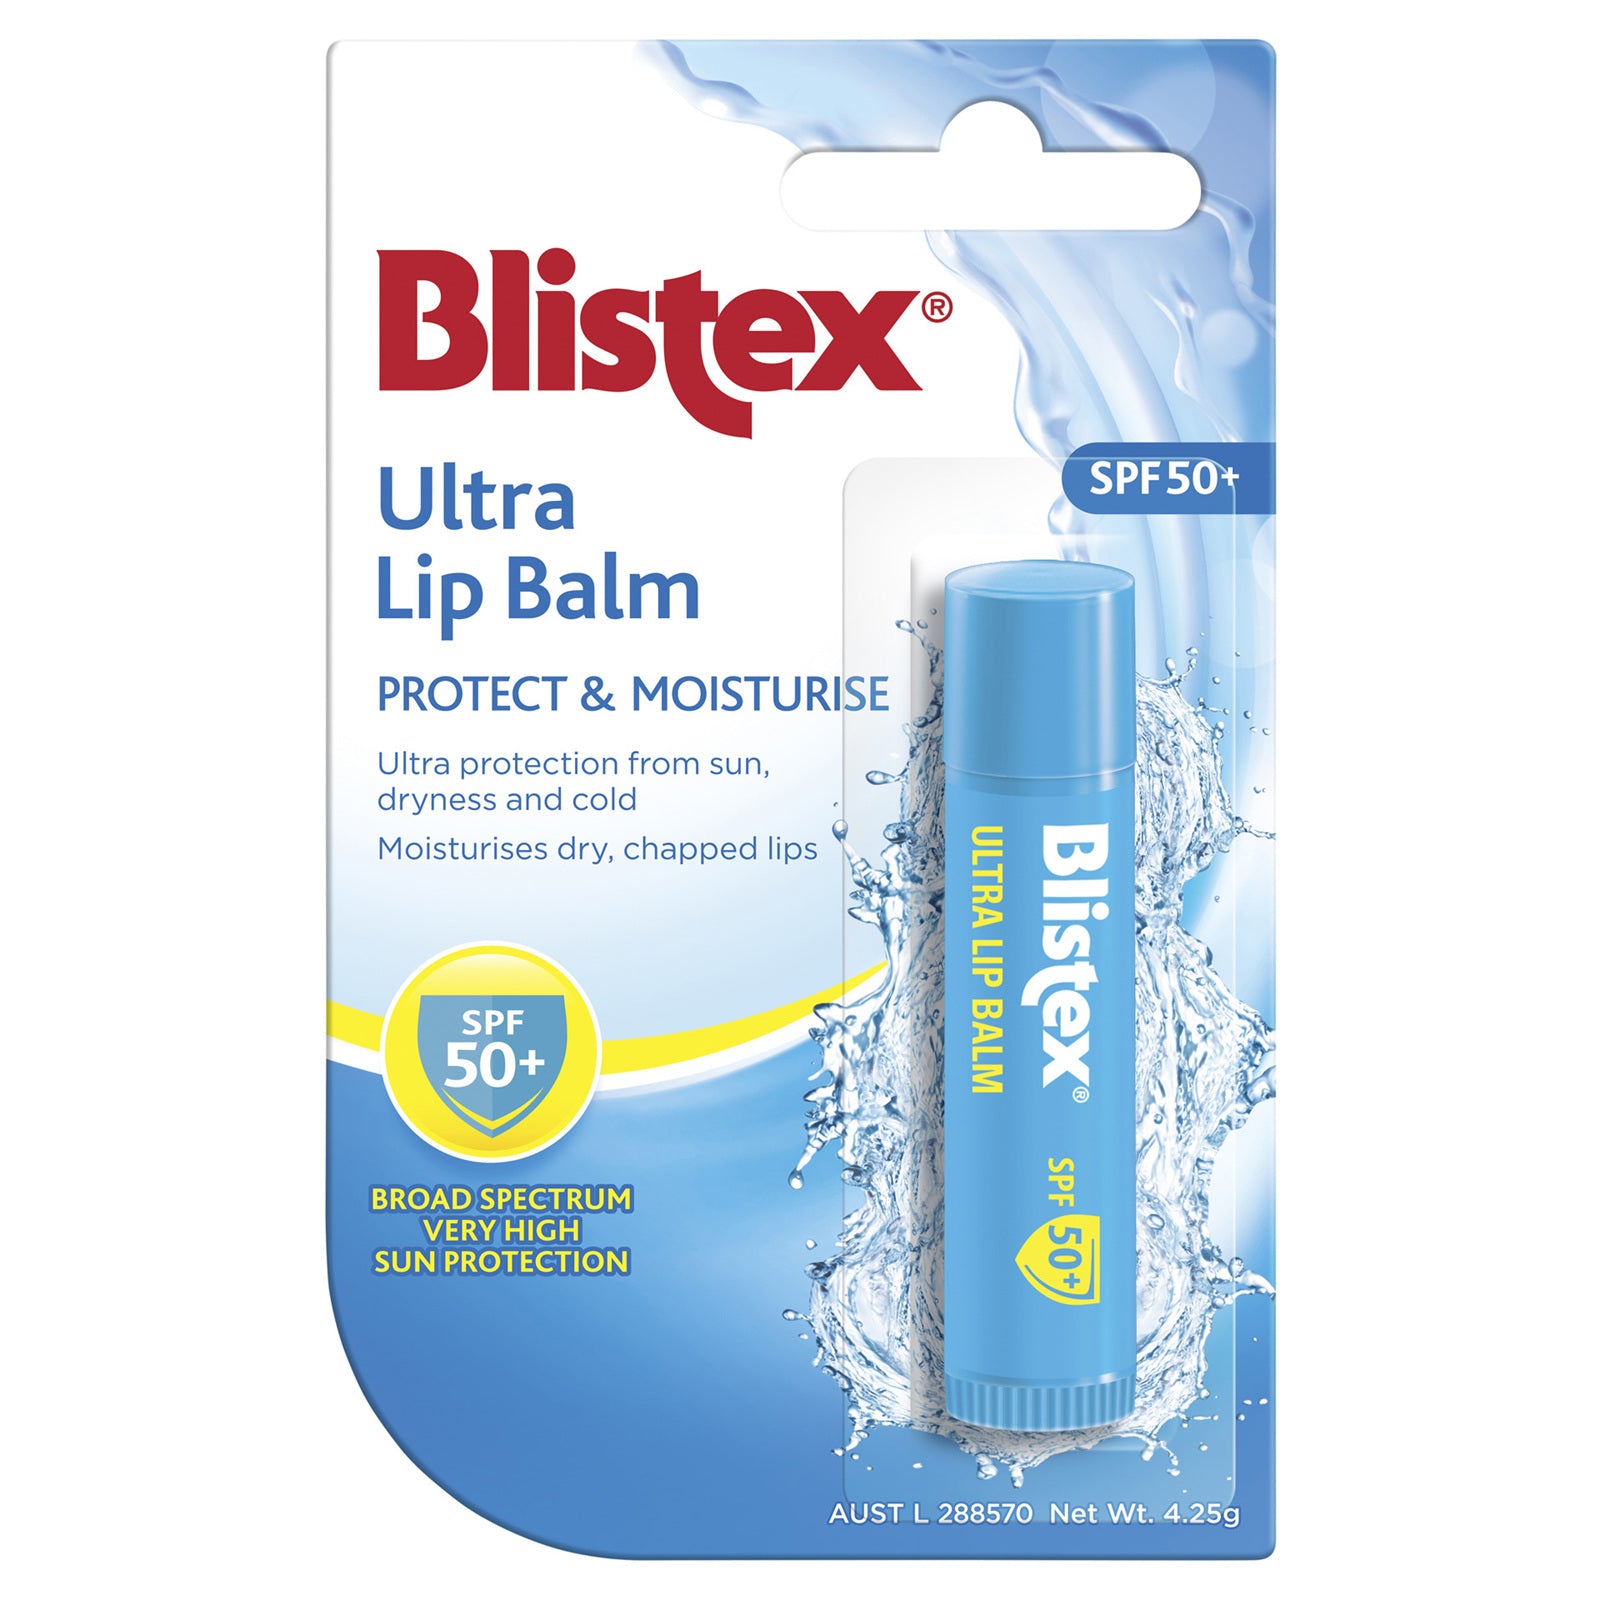 Blistex Ultra Lip Balm SPF 50+ - 4.25g